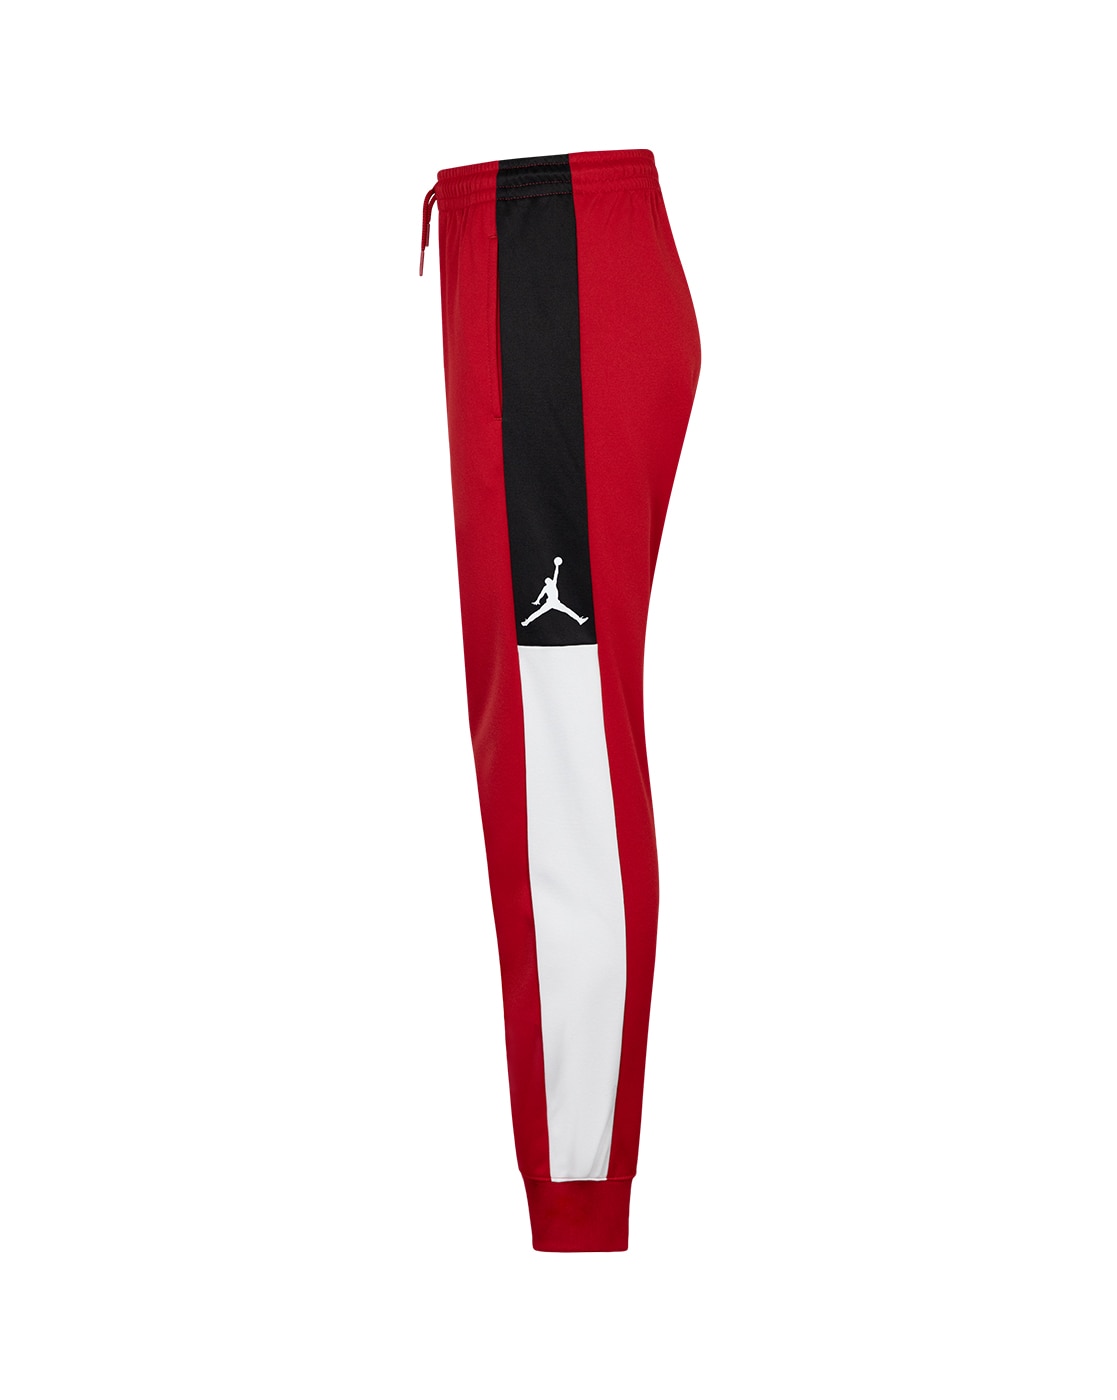 Red/Black/White Jordan Sweatpants Size Youth XL Fits... - Depop